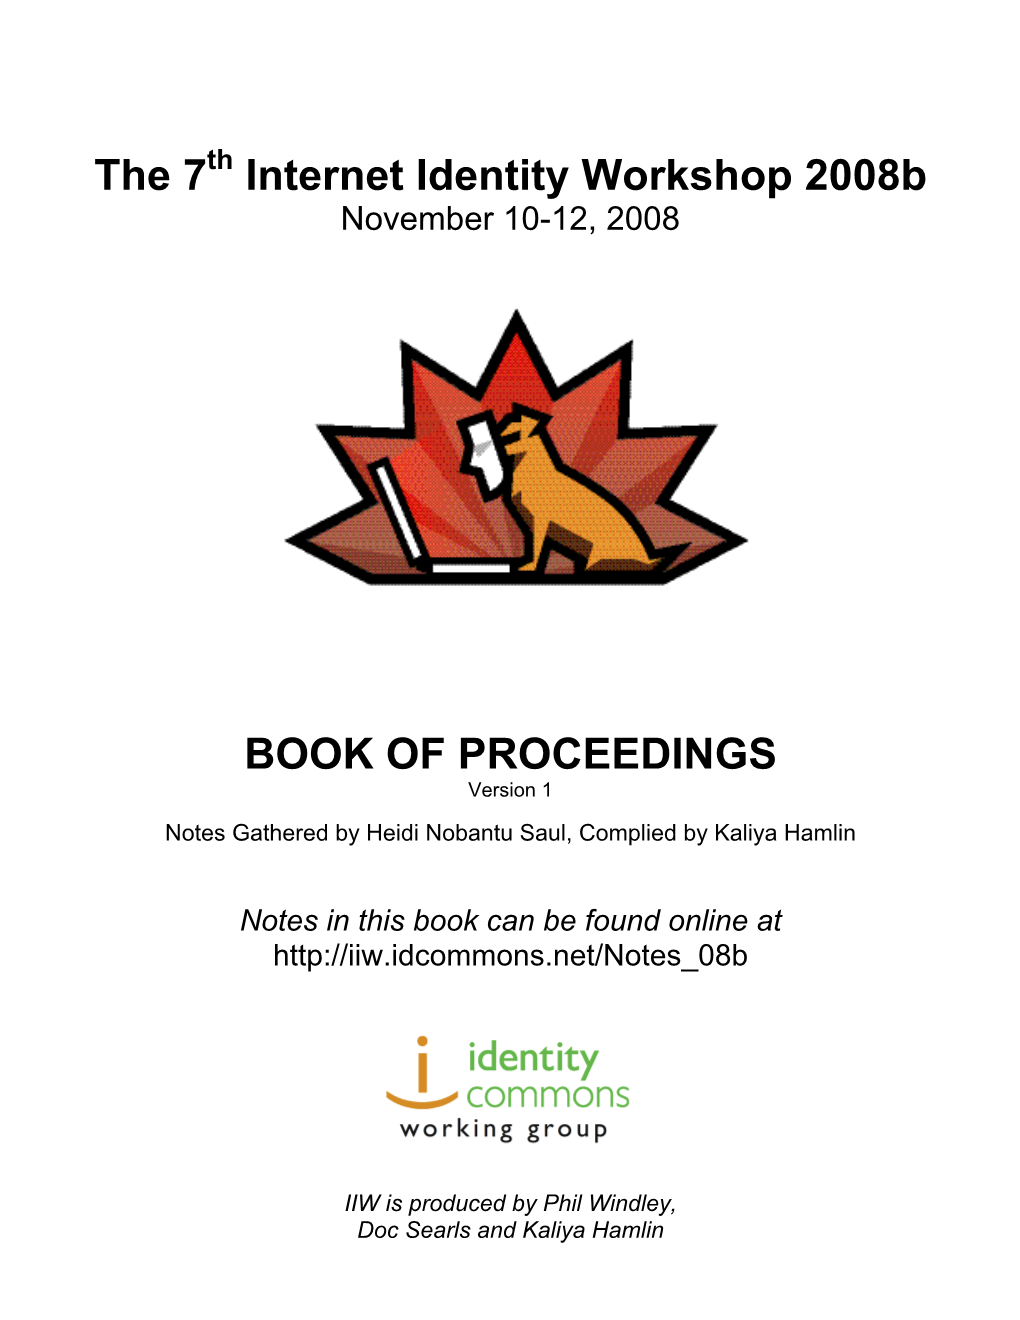 The 7 Internet Identity Workshop 2008B BOOK of PROCEEDINGS